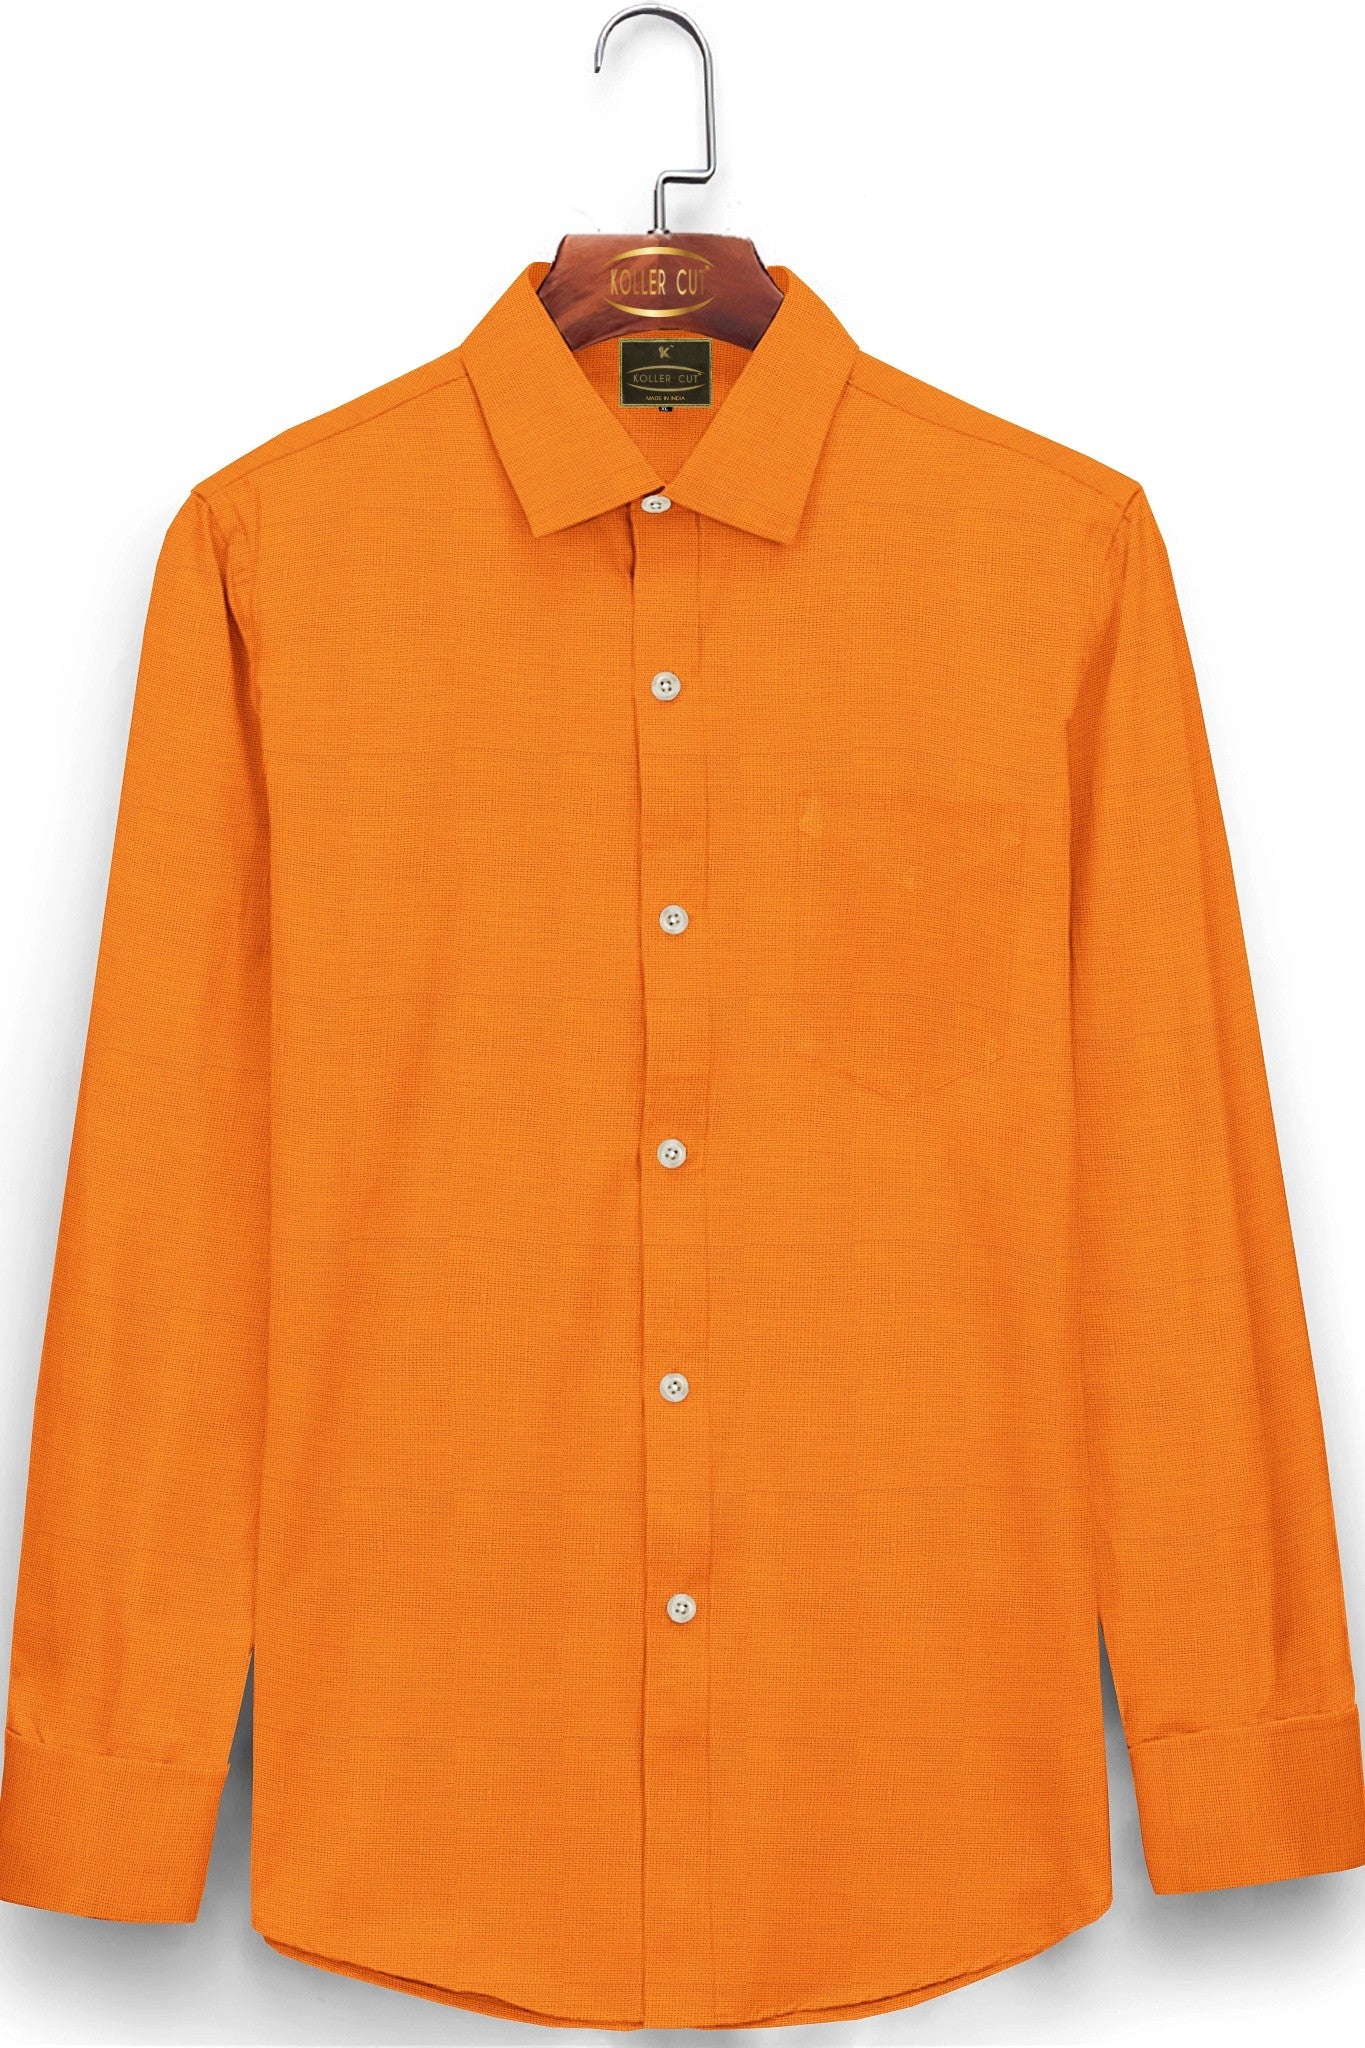 Goldfish Orange Cotton Linen Shirt